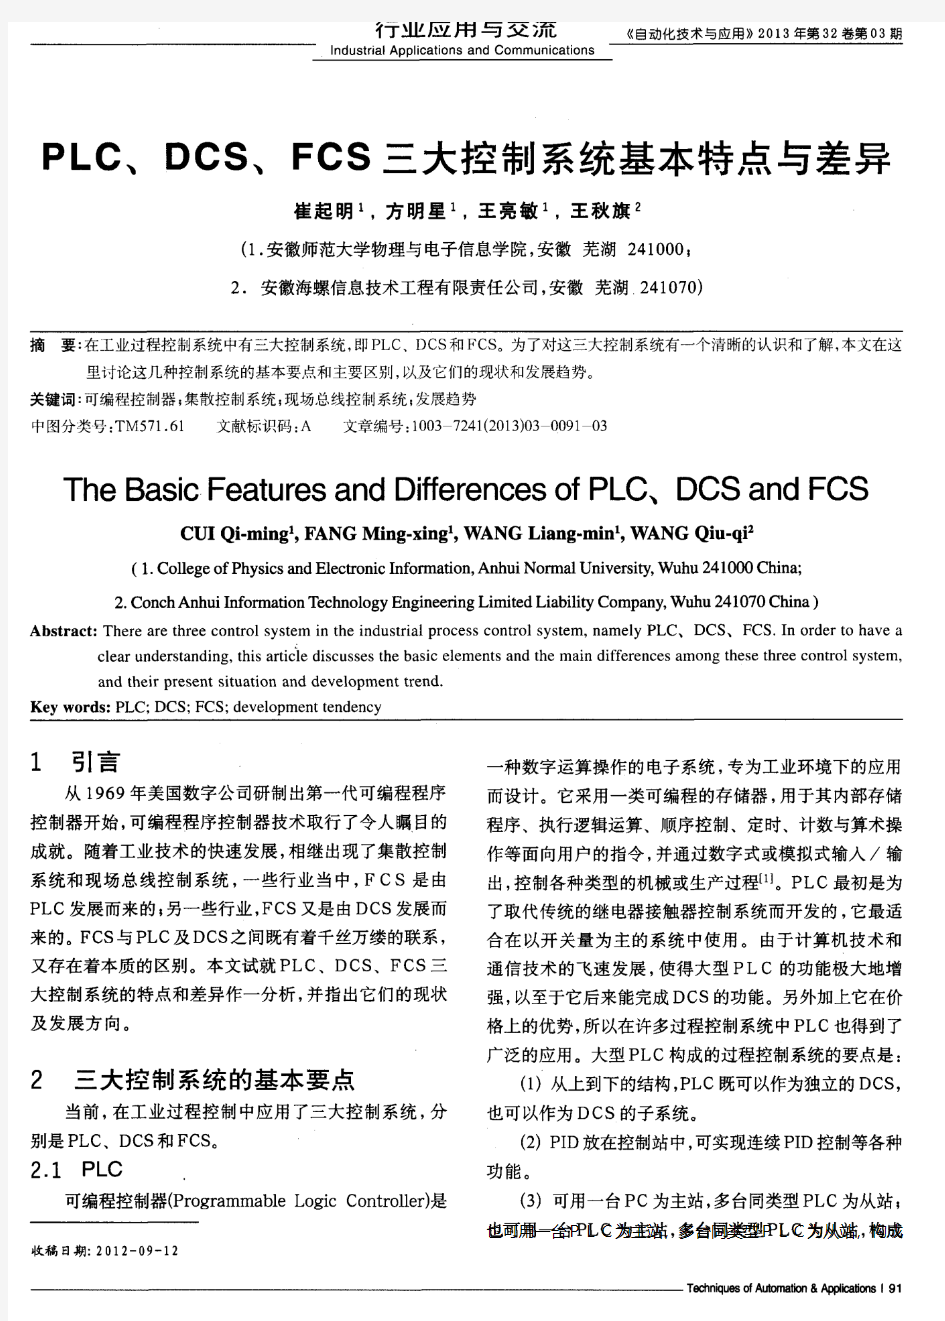 PLC、DCS、FCS三大控制系统基本特点与差异